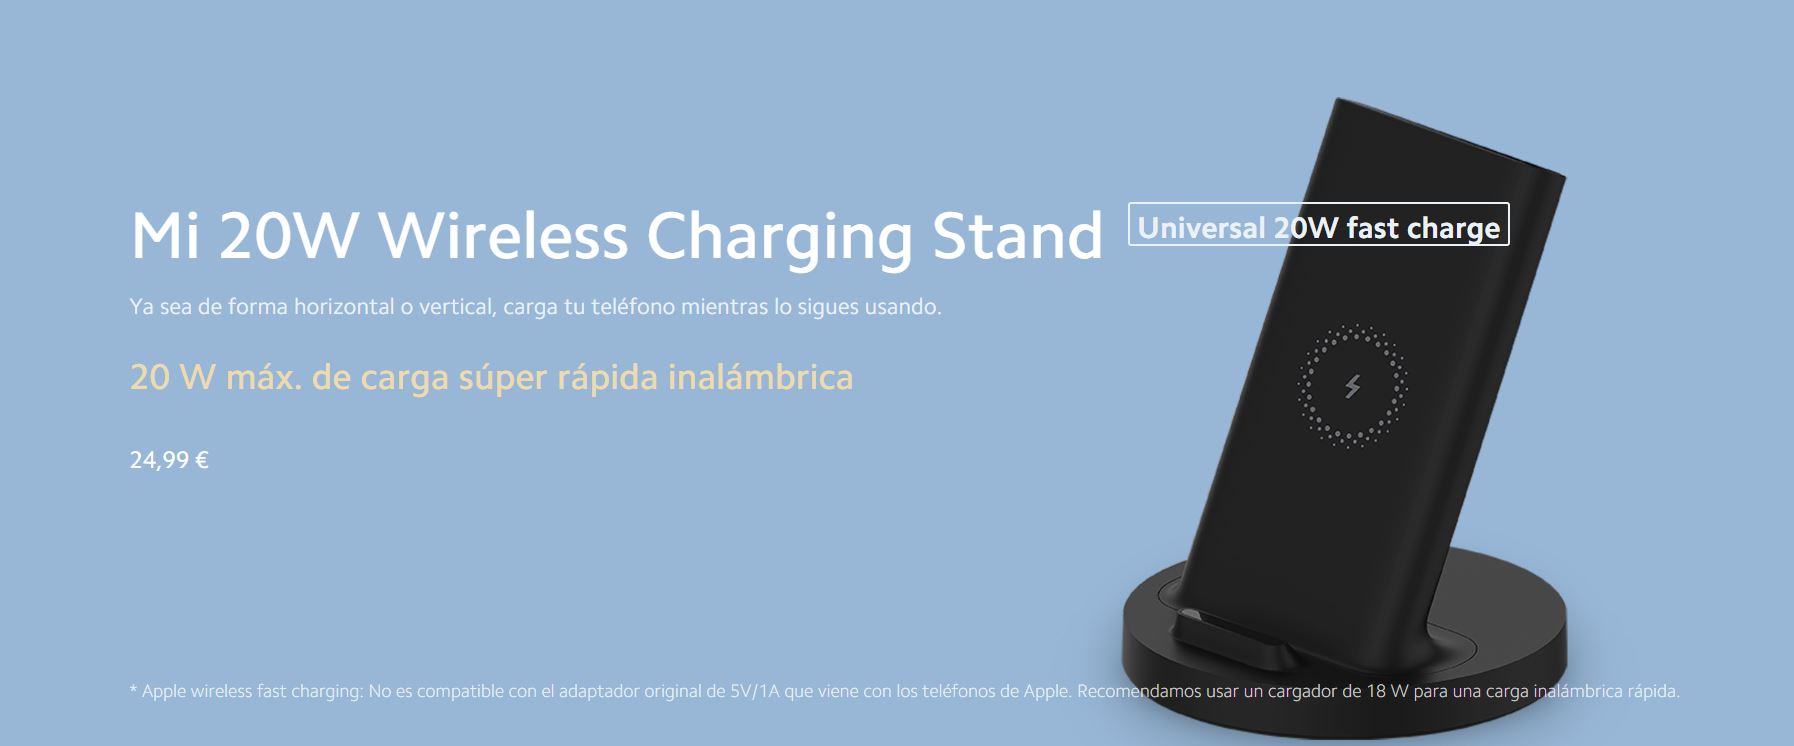 mi-20w-wireless-charging-stand - Mi Global Home